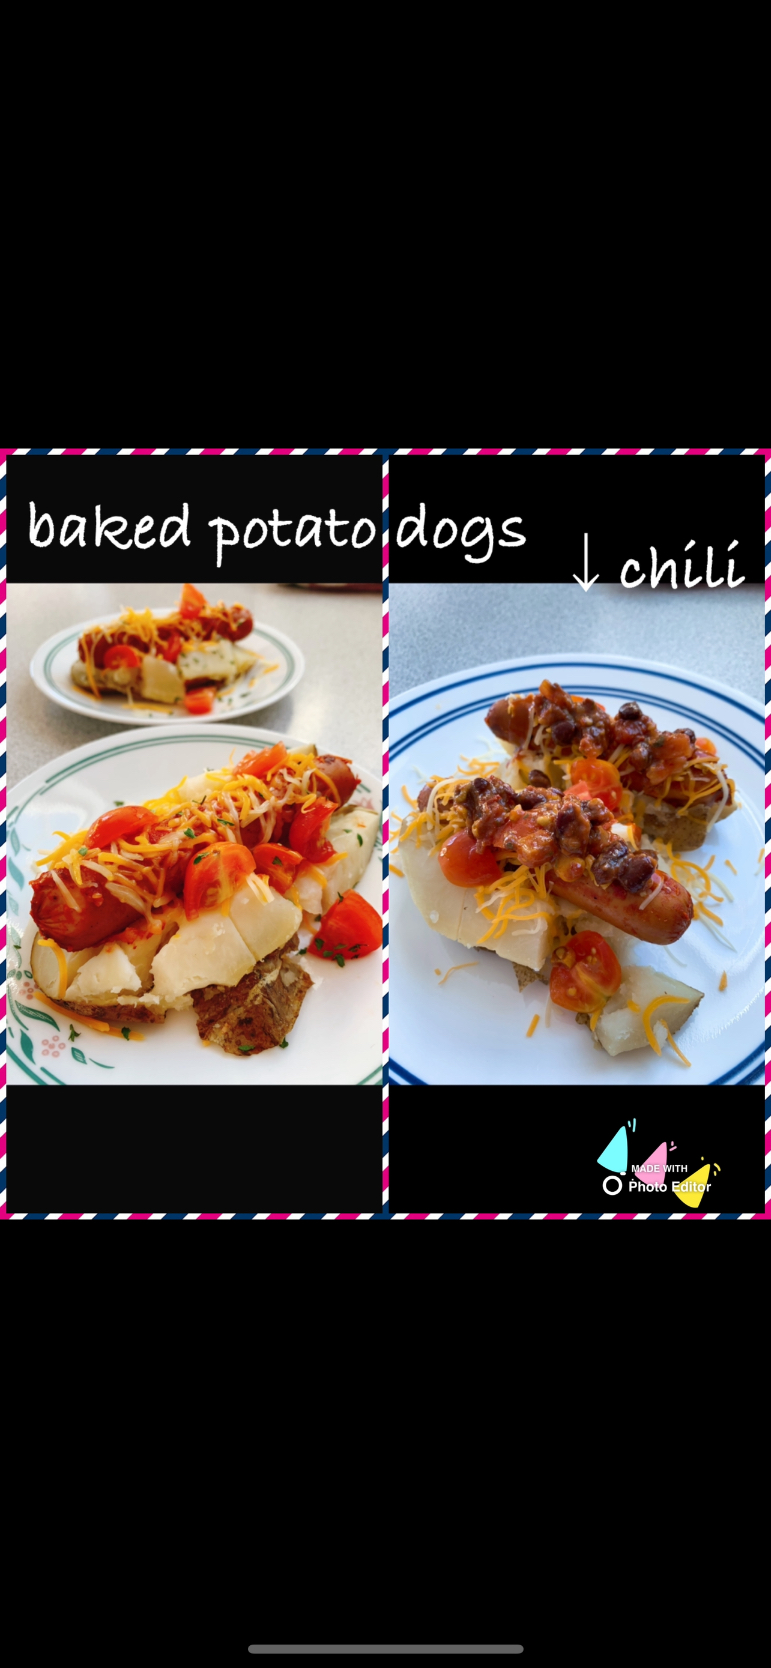 baked potato dogs?! (chili)